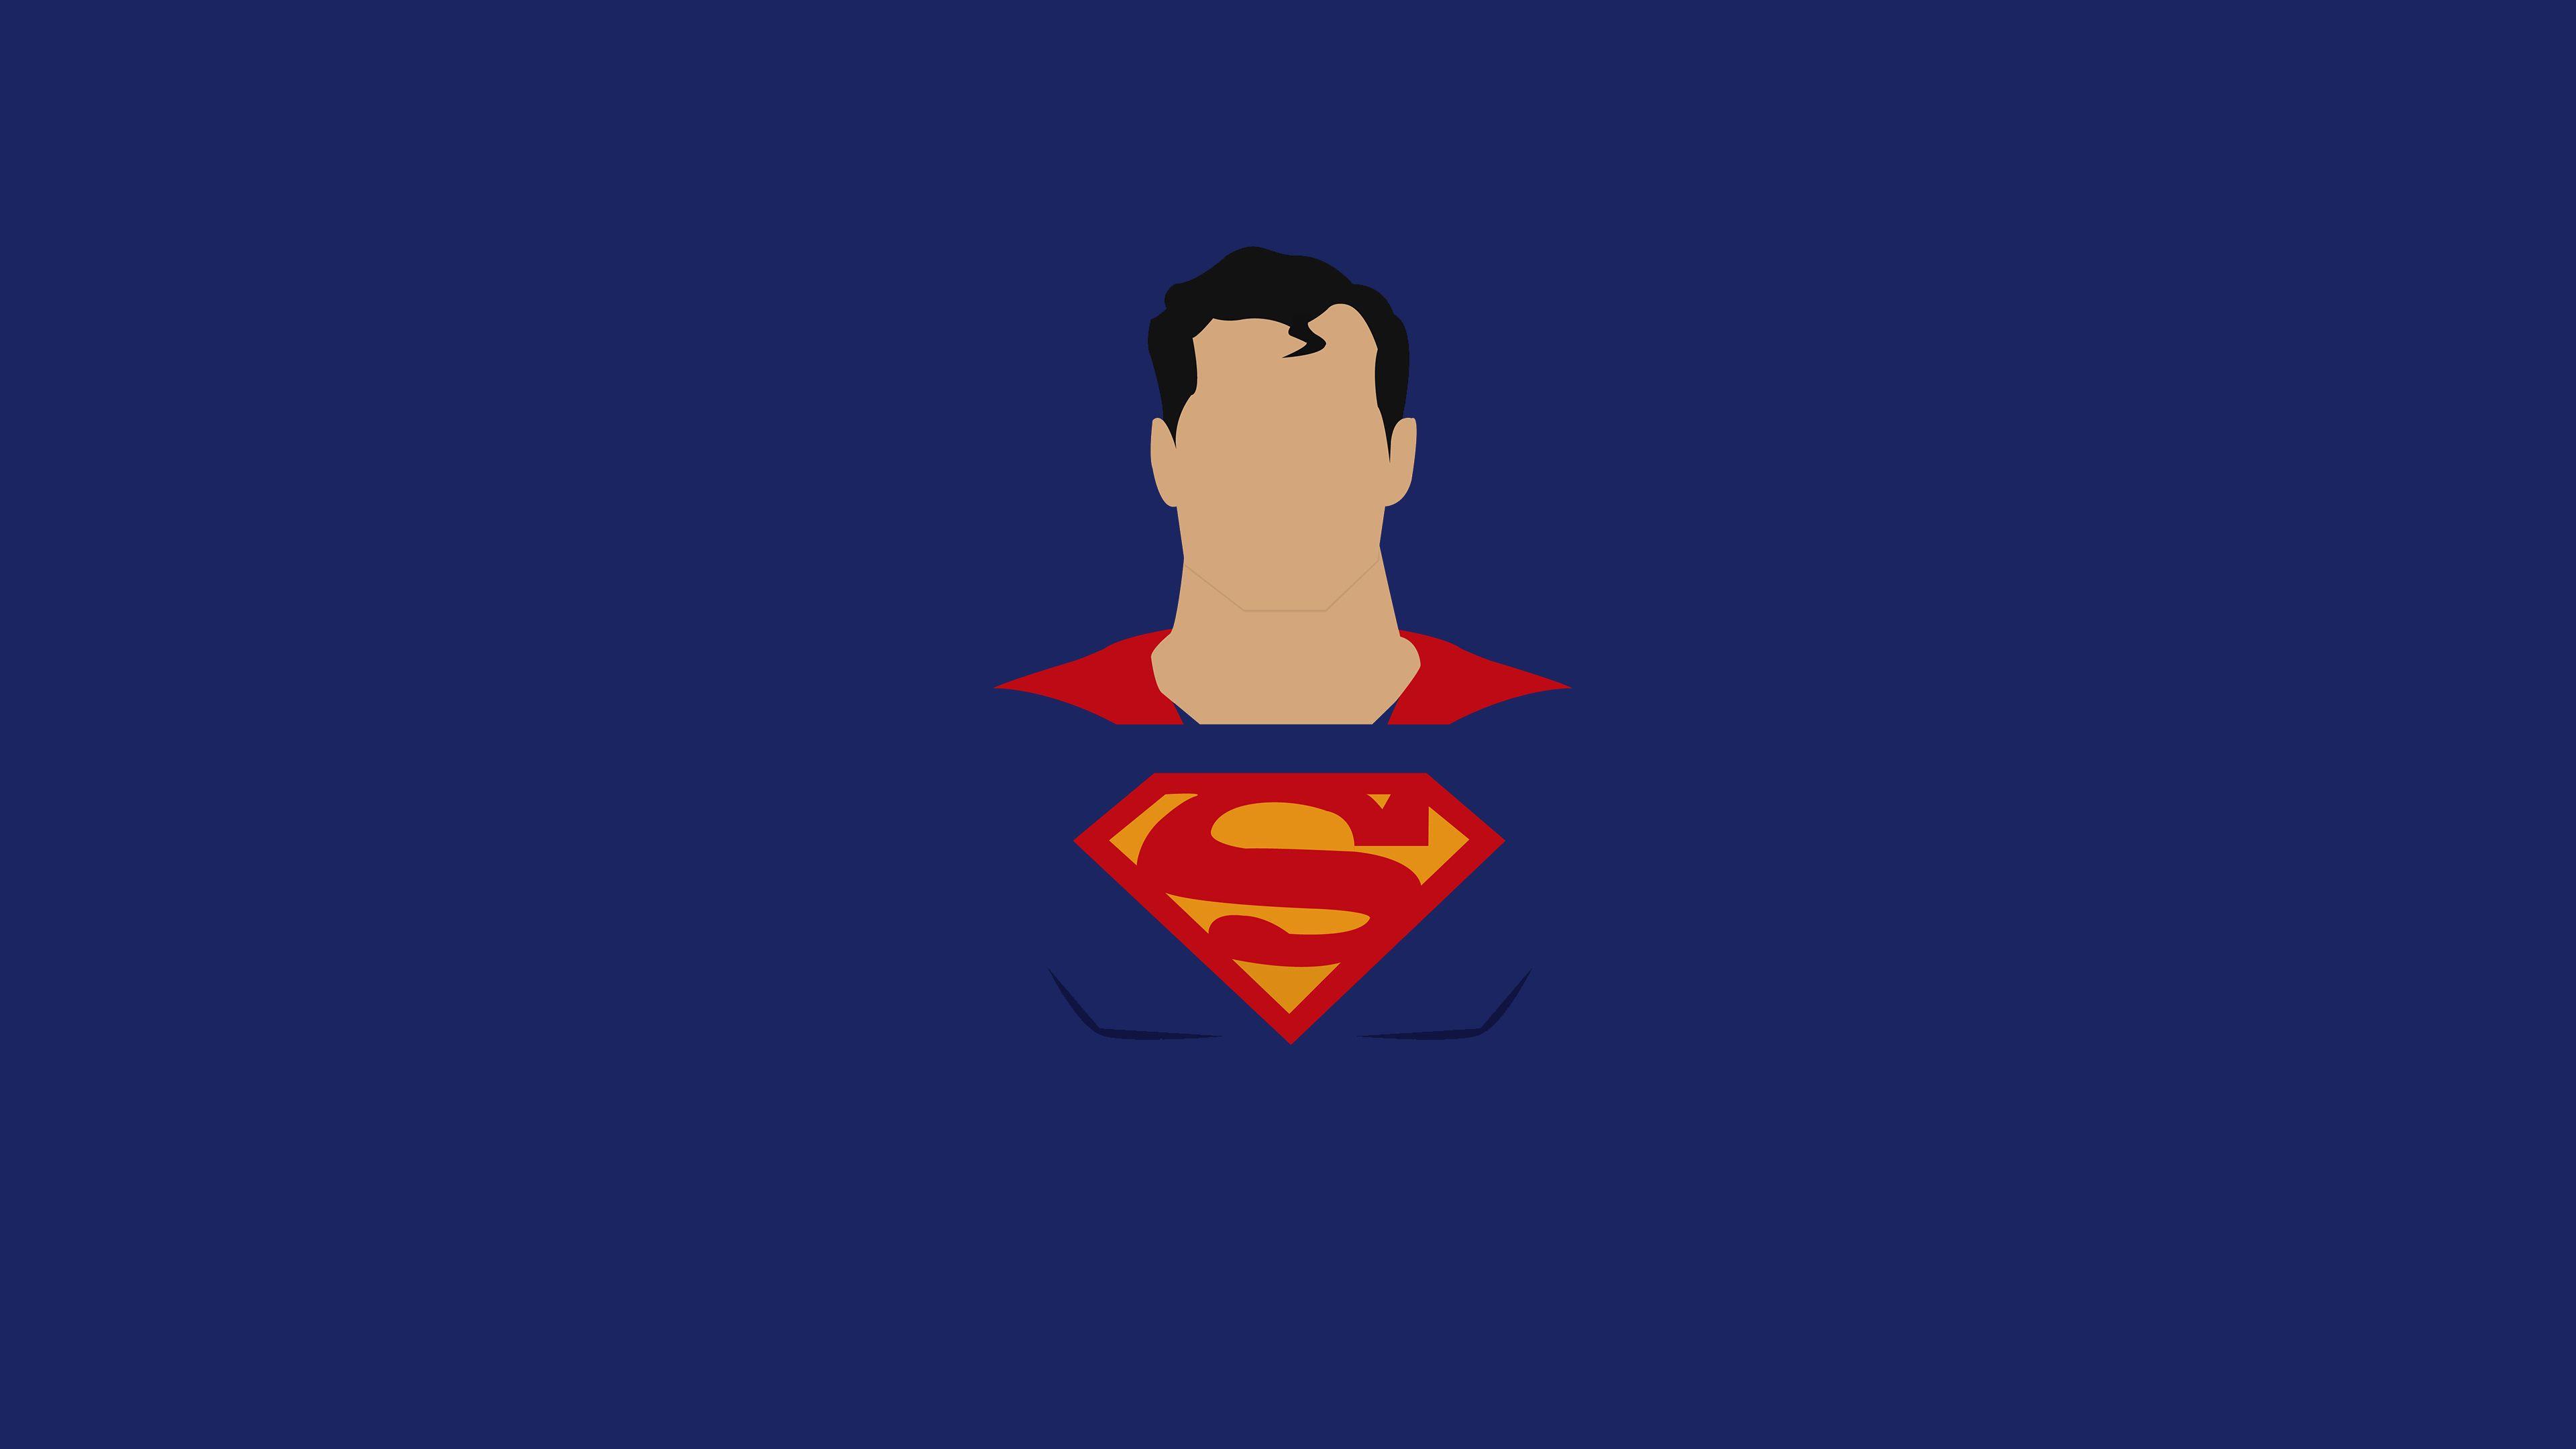 Wallpaper ID: 52623 / superman, superheroes, minimalism, 4k, 5k, 8k, hd,  deviantart free download